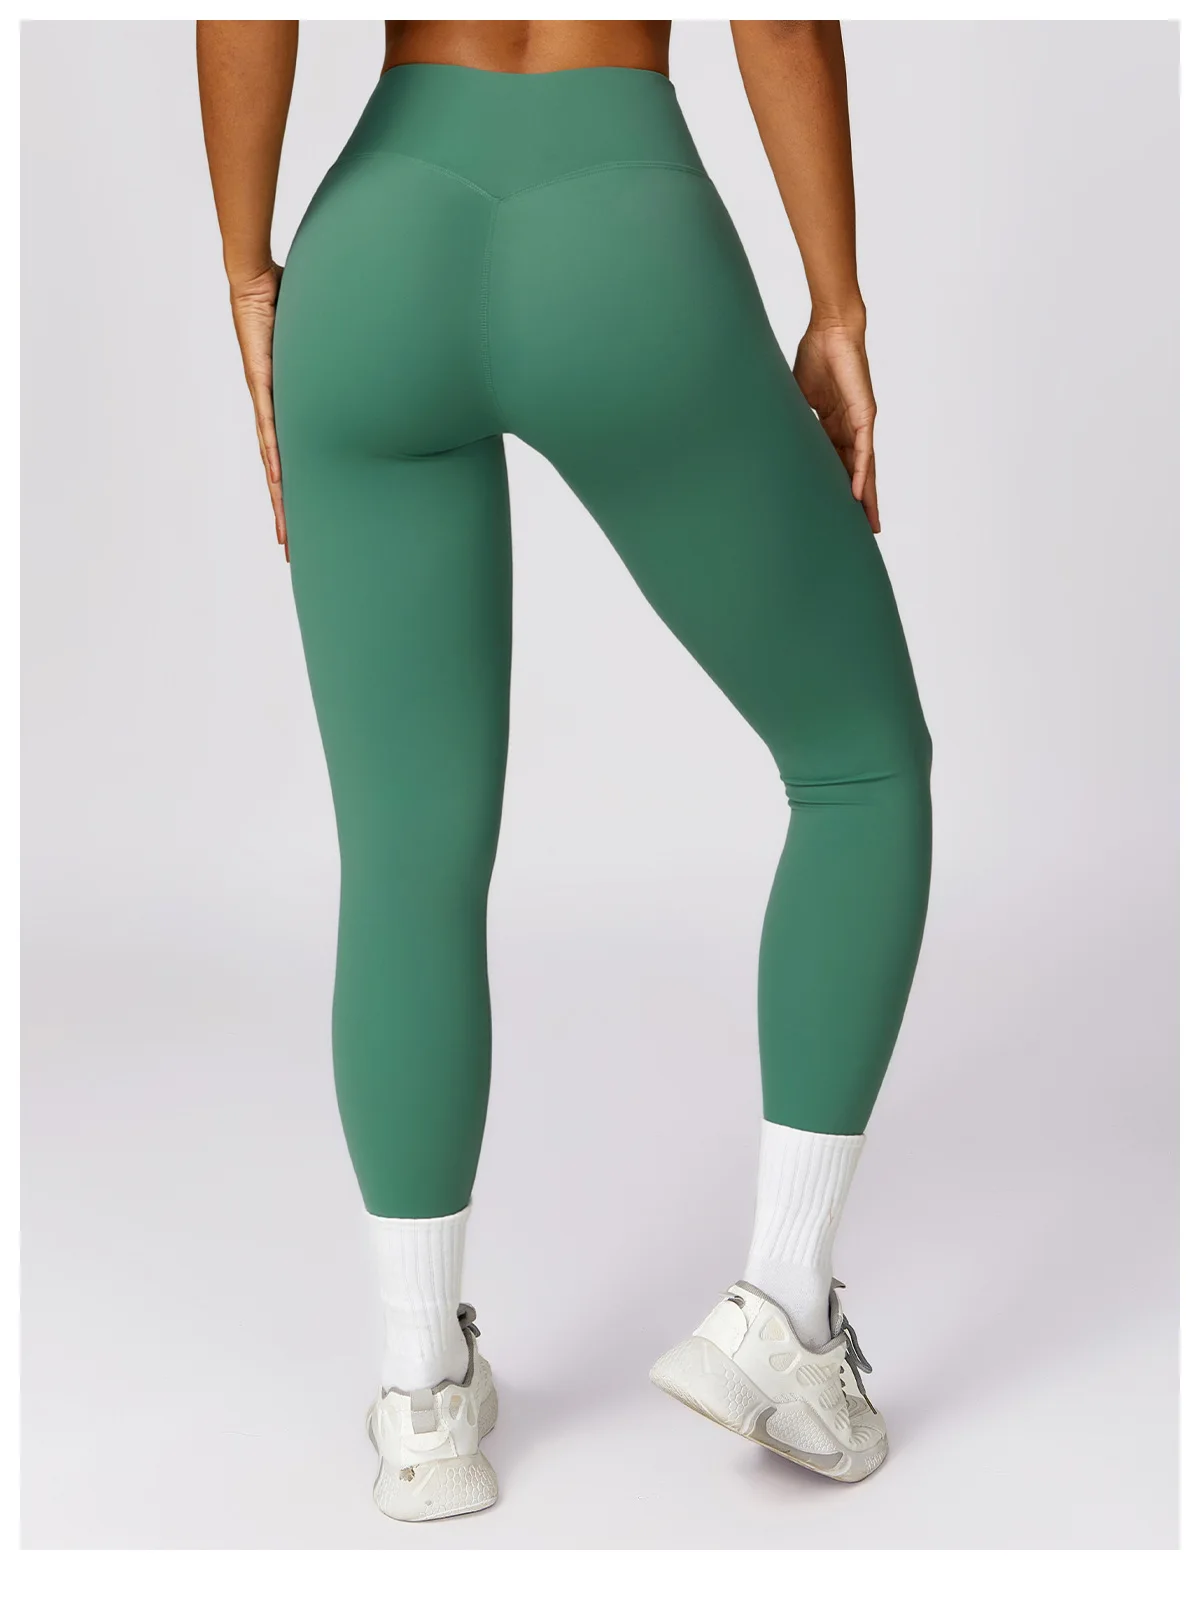 Jy Custom Logo Activewear Women Super Soft Sports Plus Size Yoga Sets ...